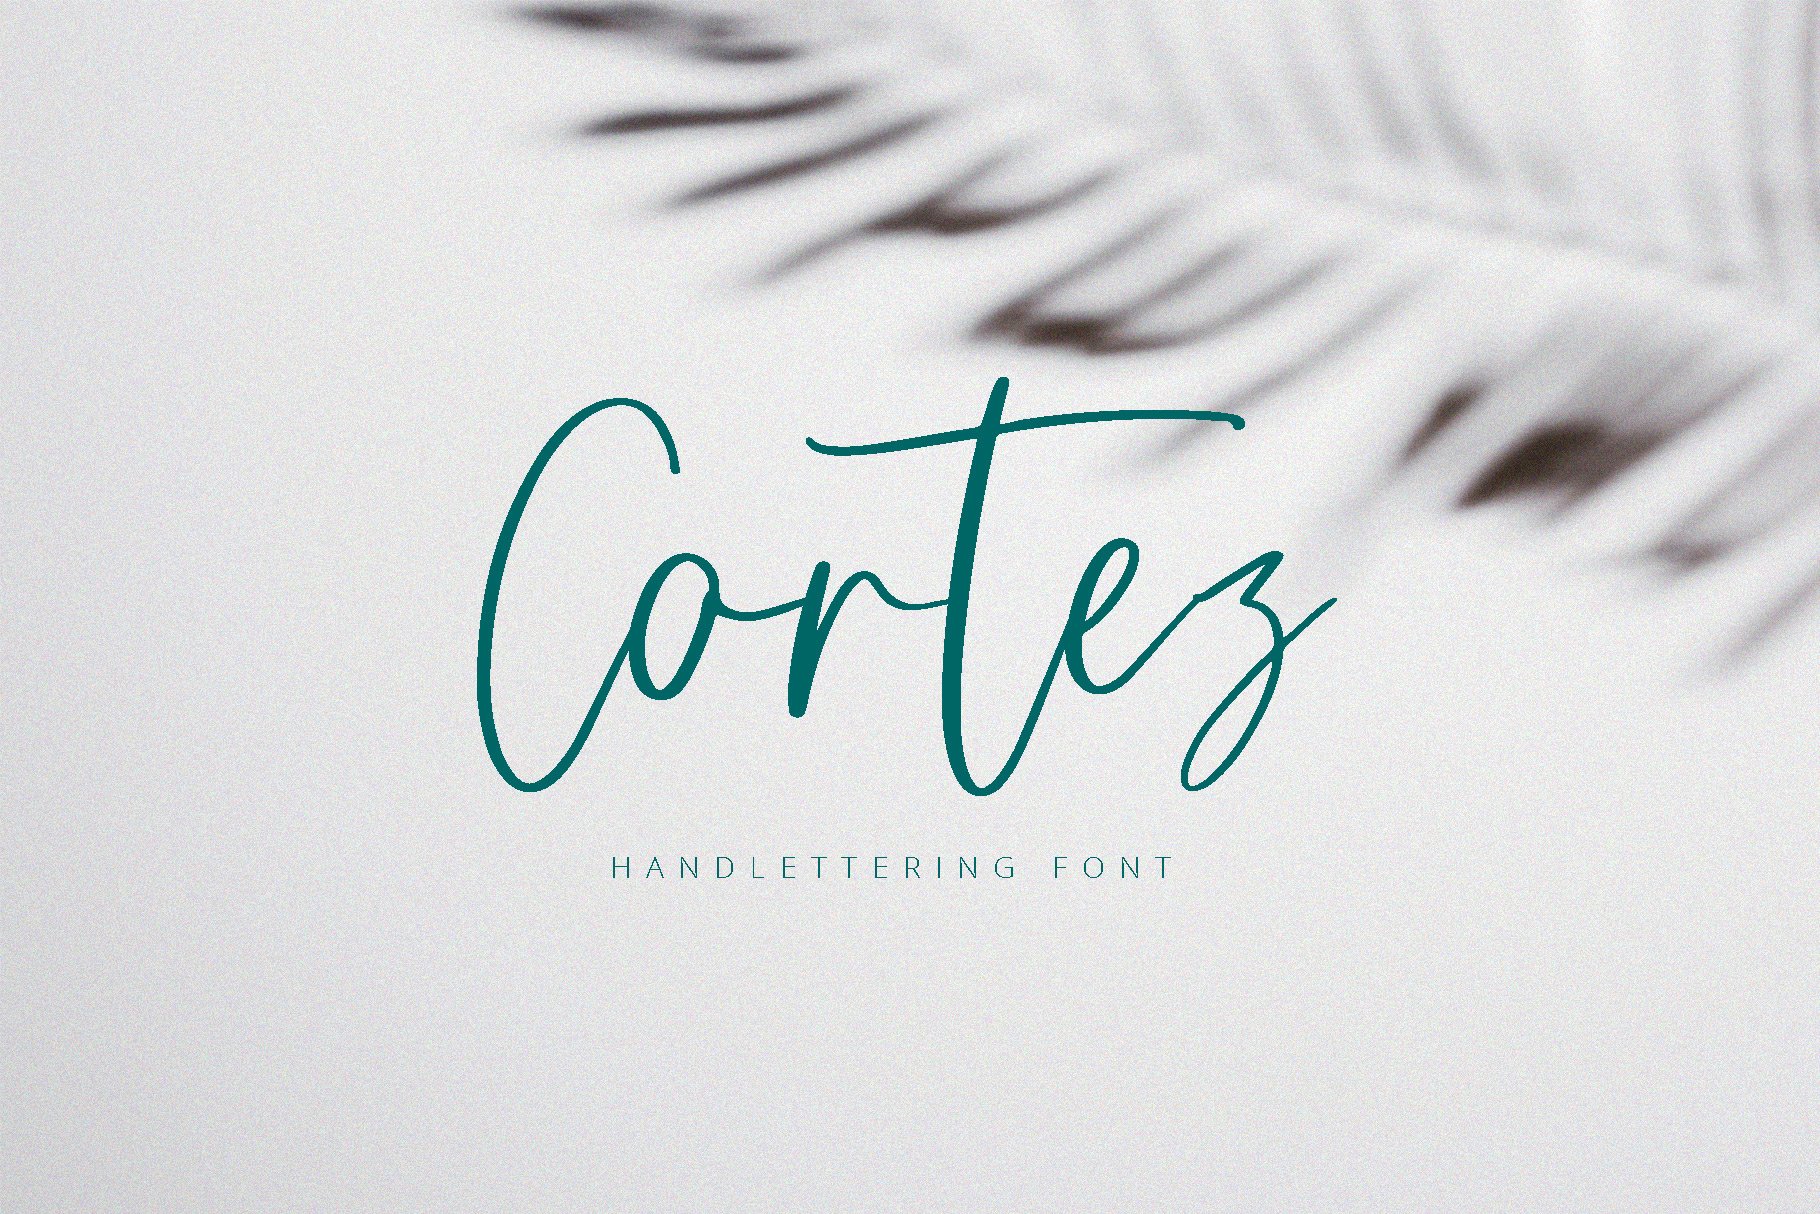 Cortez | Handwritten Font cover image.